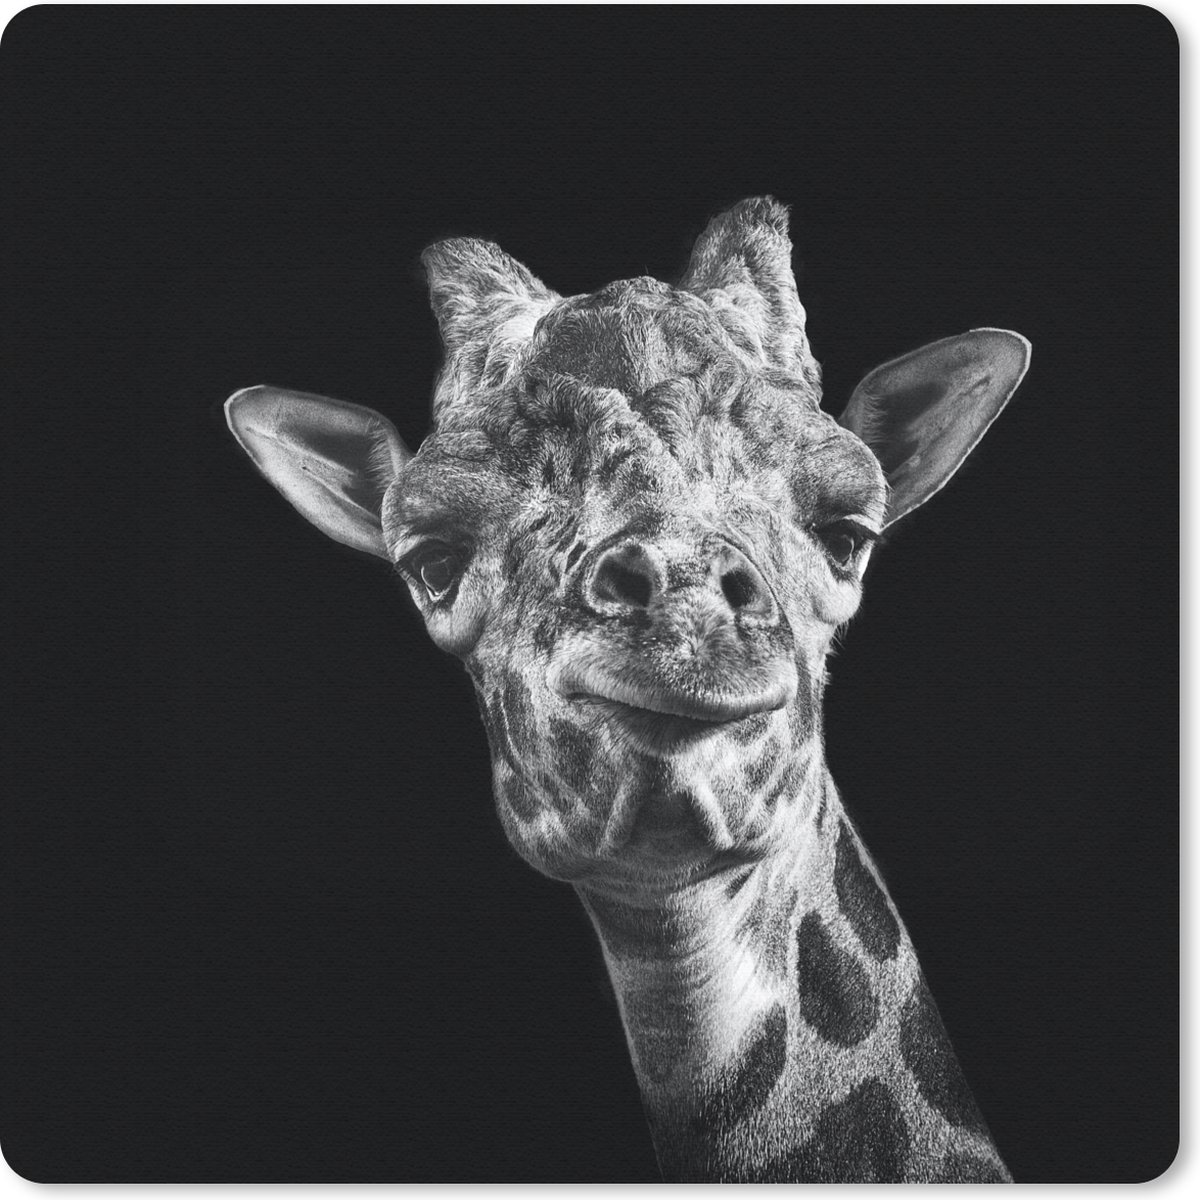 Muismat - Giraffe tegen zwarte achtergrond in zwart-wit - 20x20